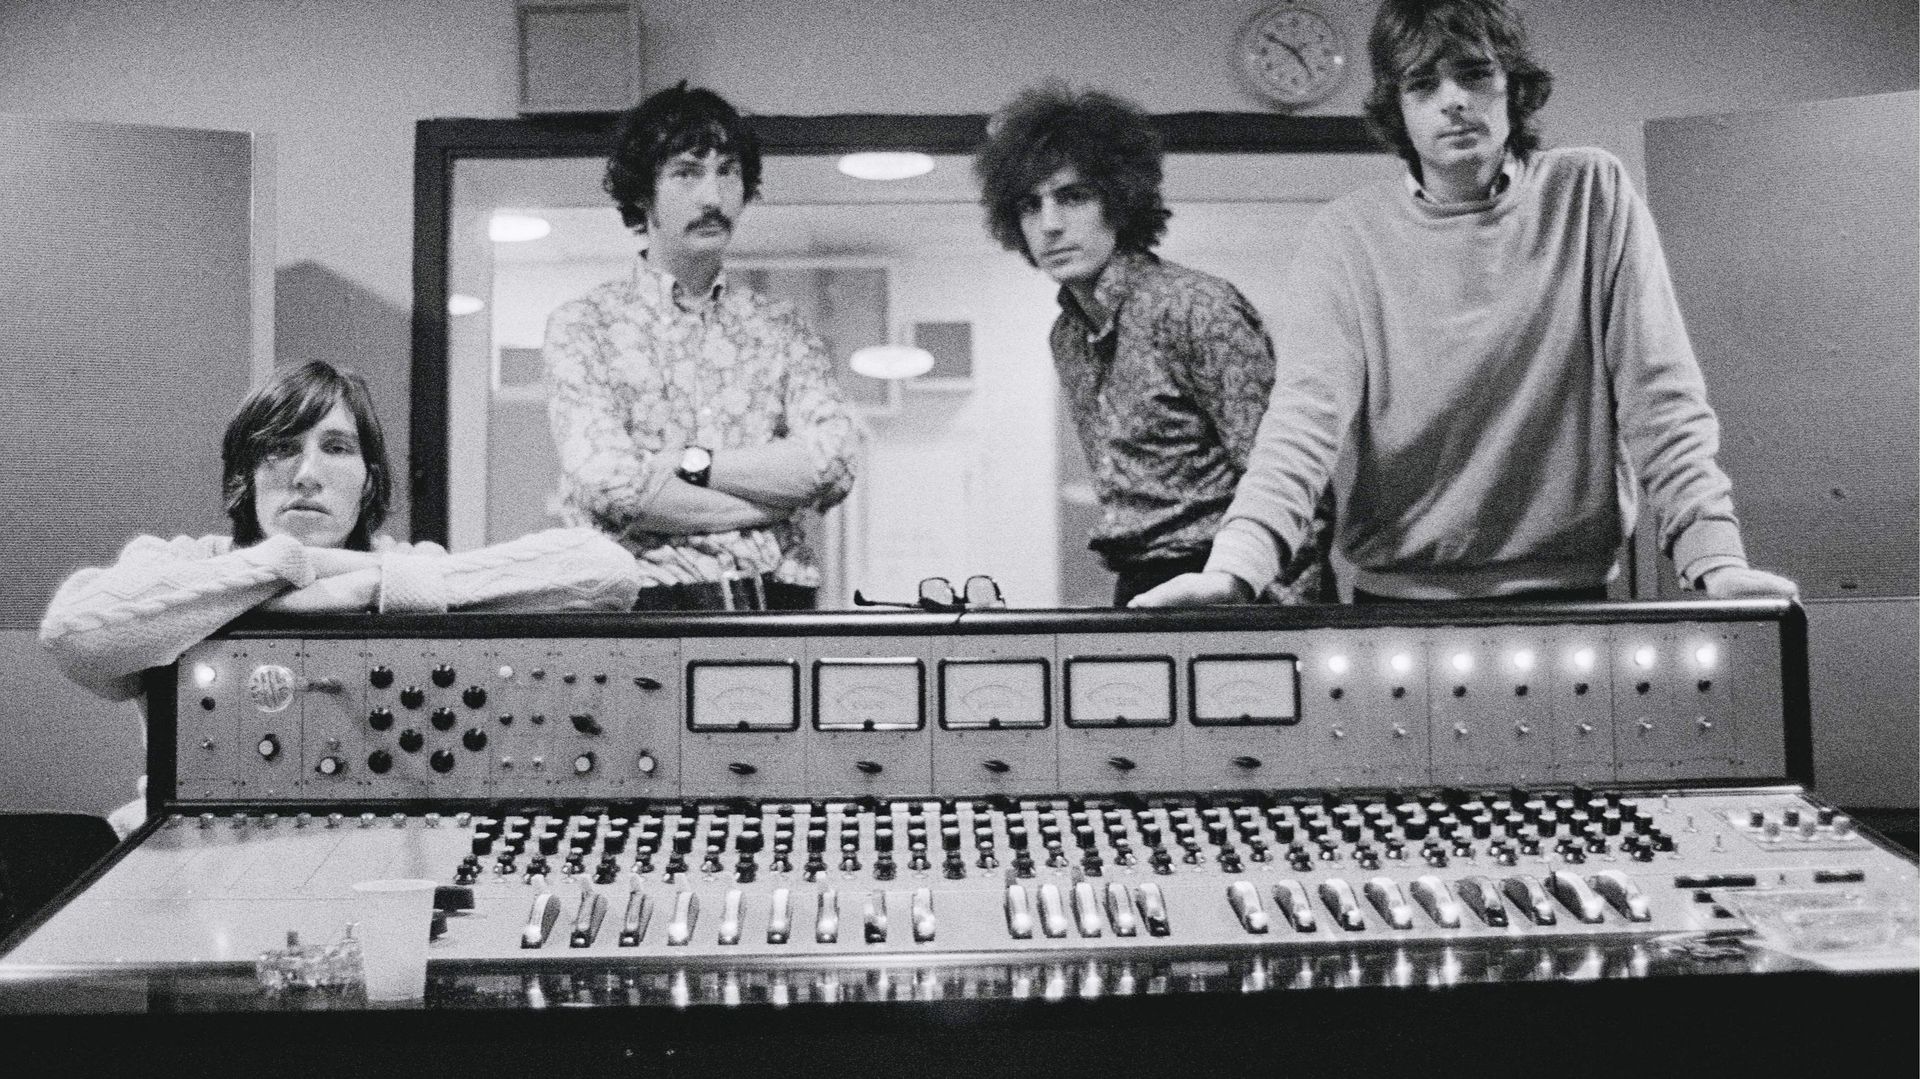 De gauche à droite : Roger Waters, Nick Mason, Syd Barrett, Rick Wright en studio, à côté de la table de mixage (1967).